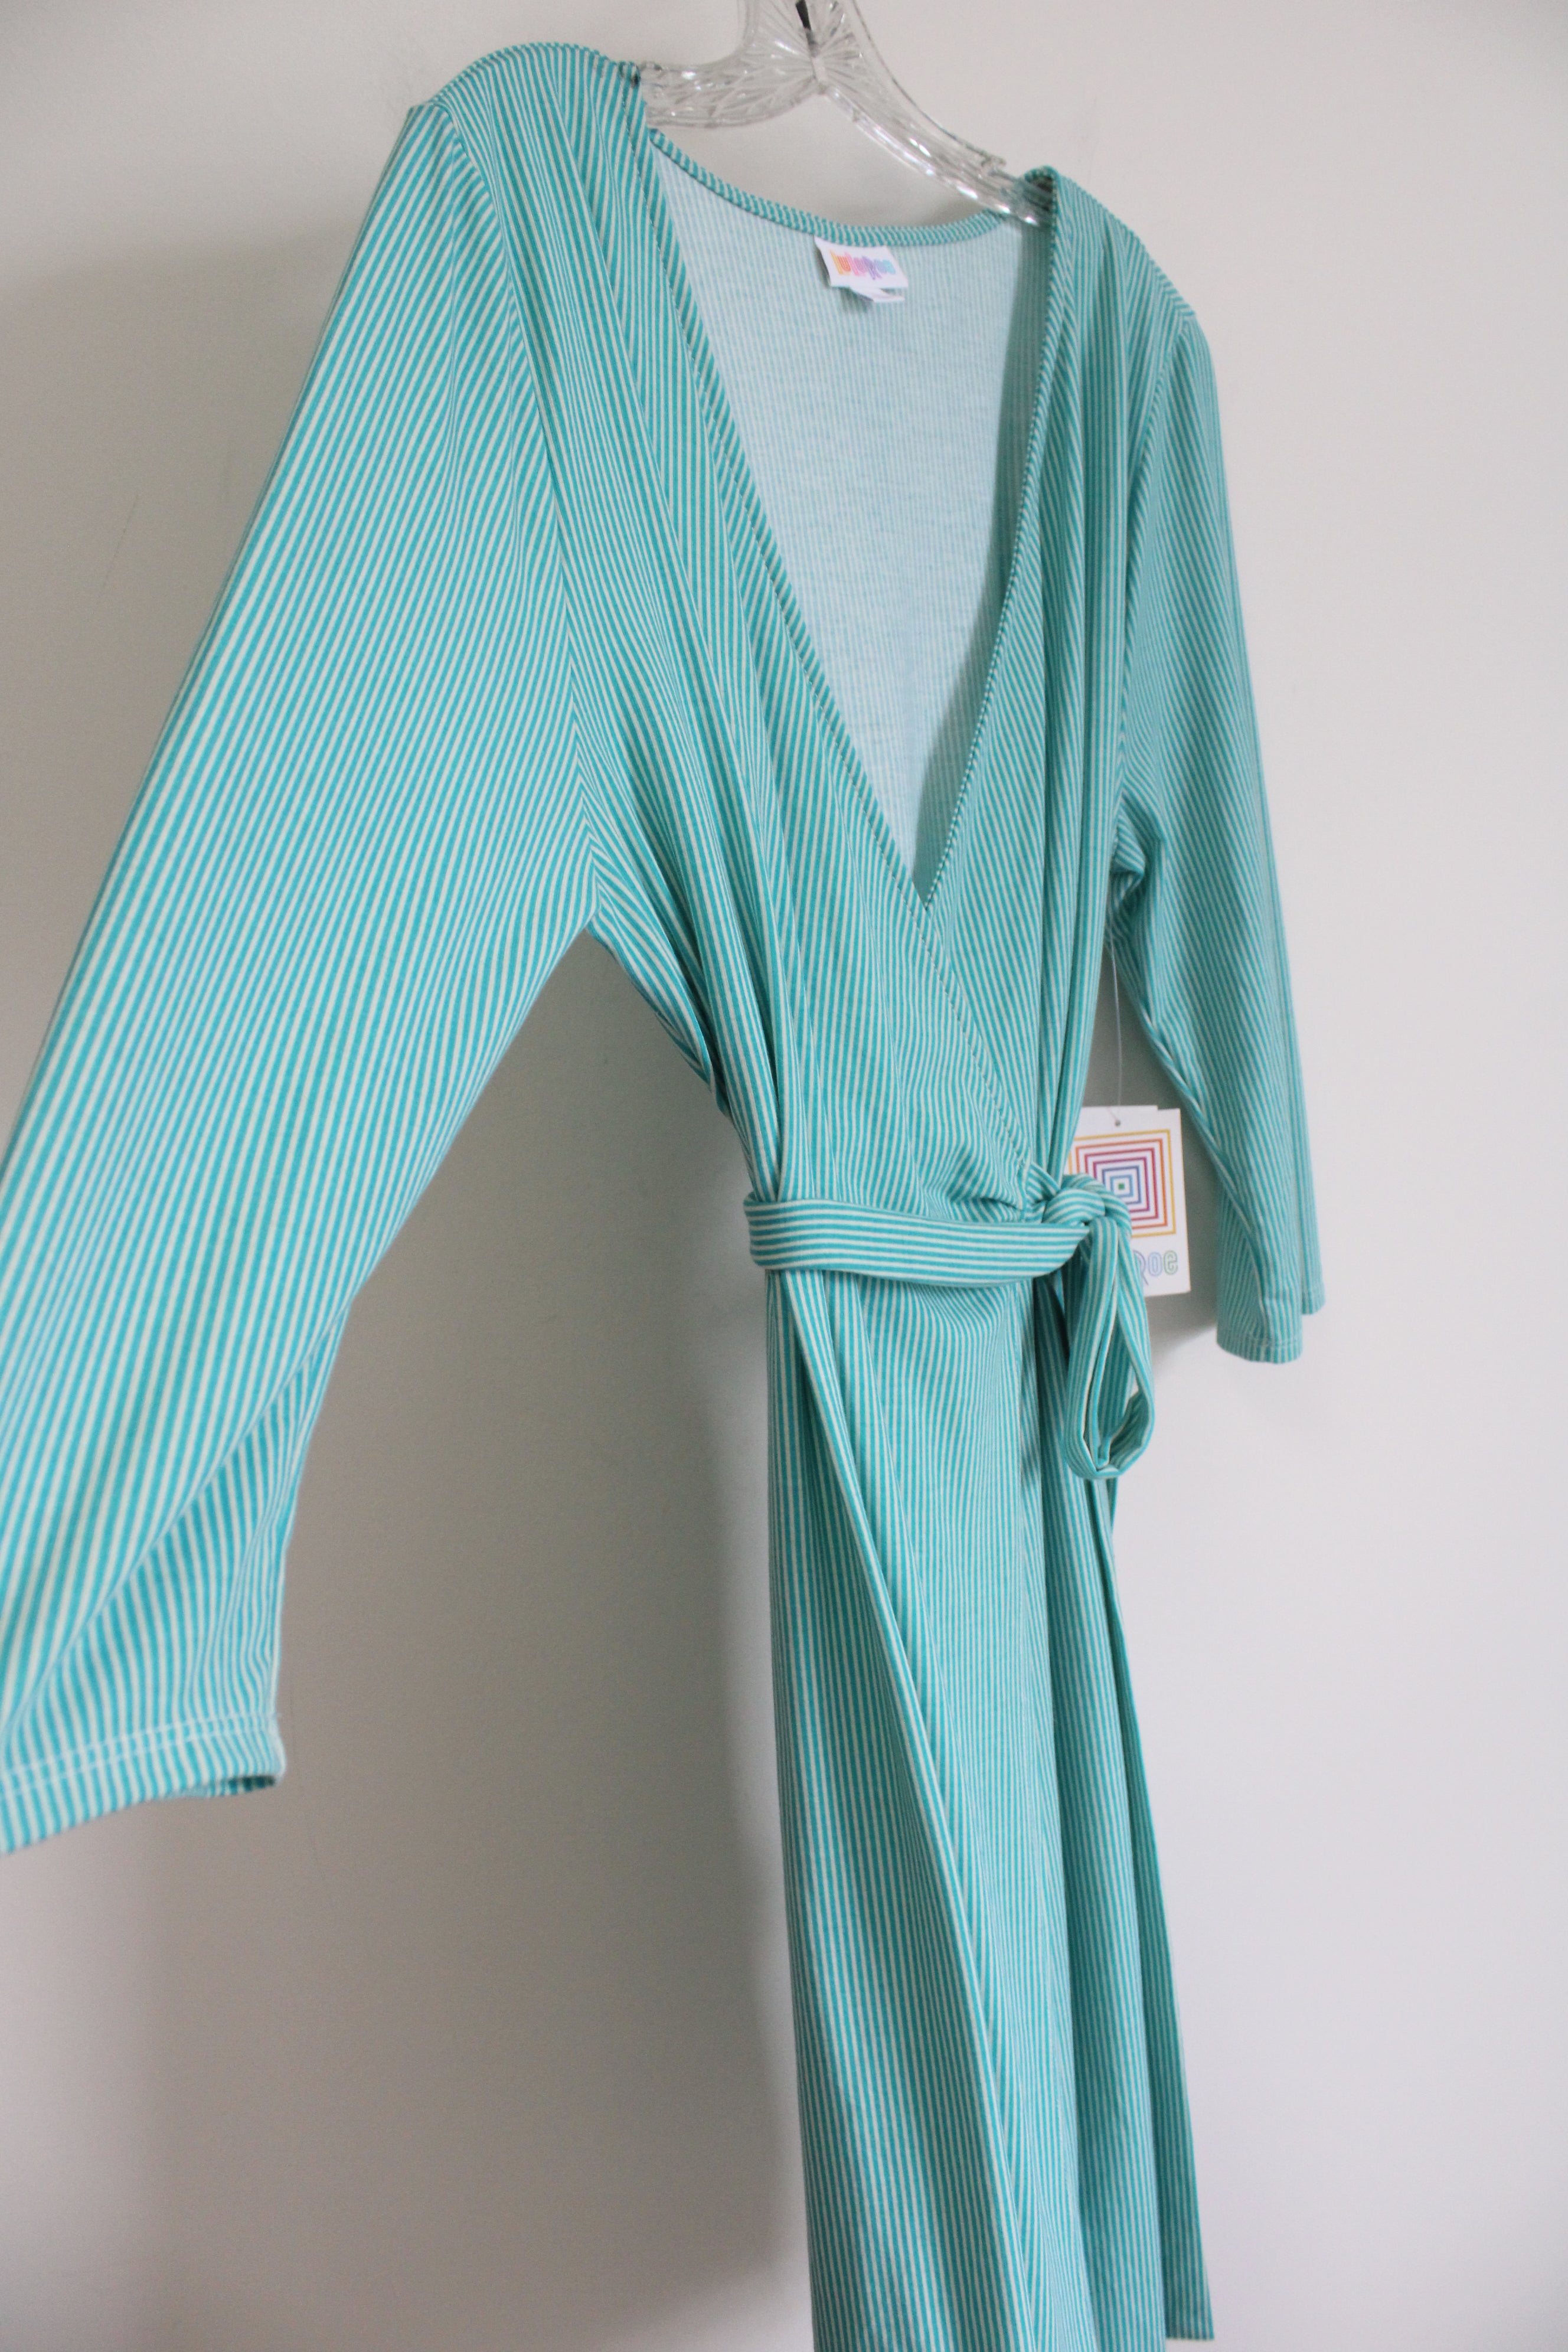 NEW LuLaRoe Michelle Turquoise Blue Striped Wrap Dress | L